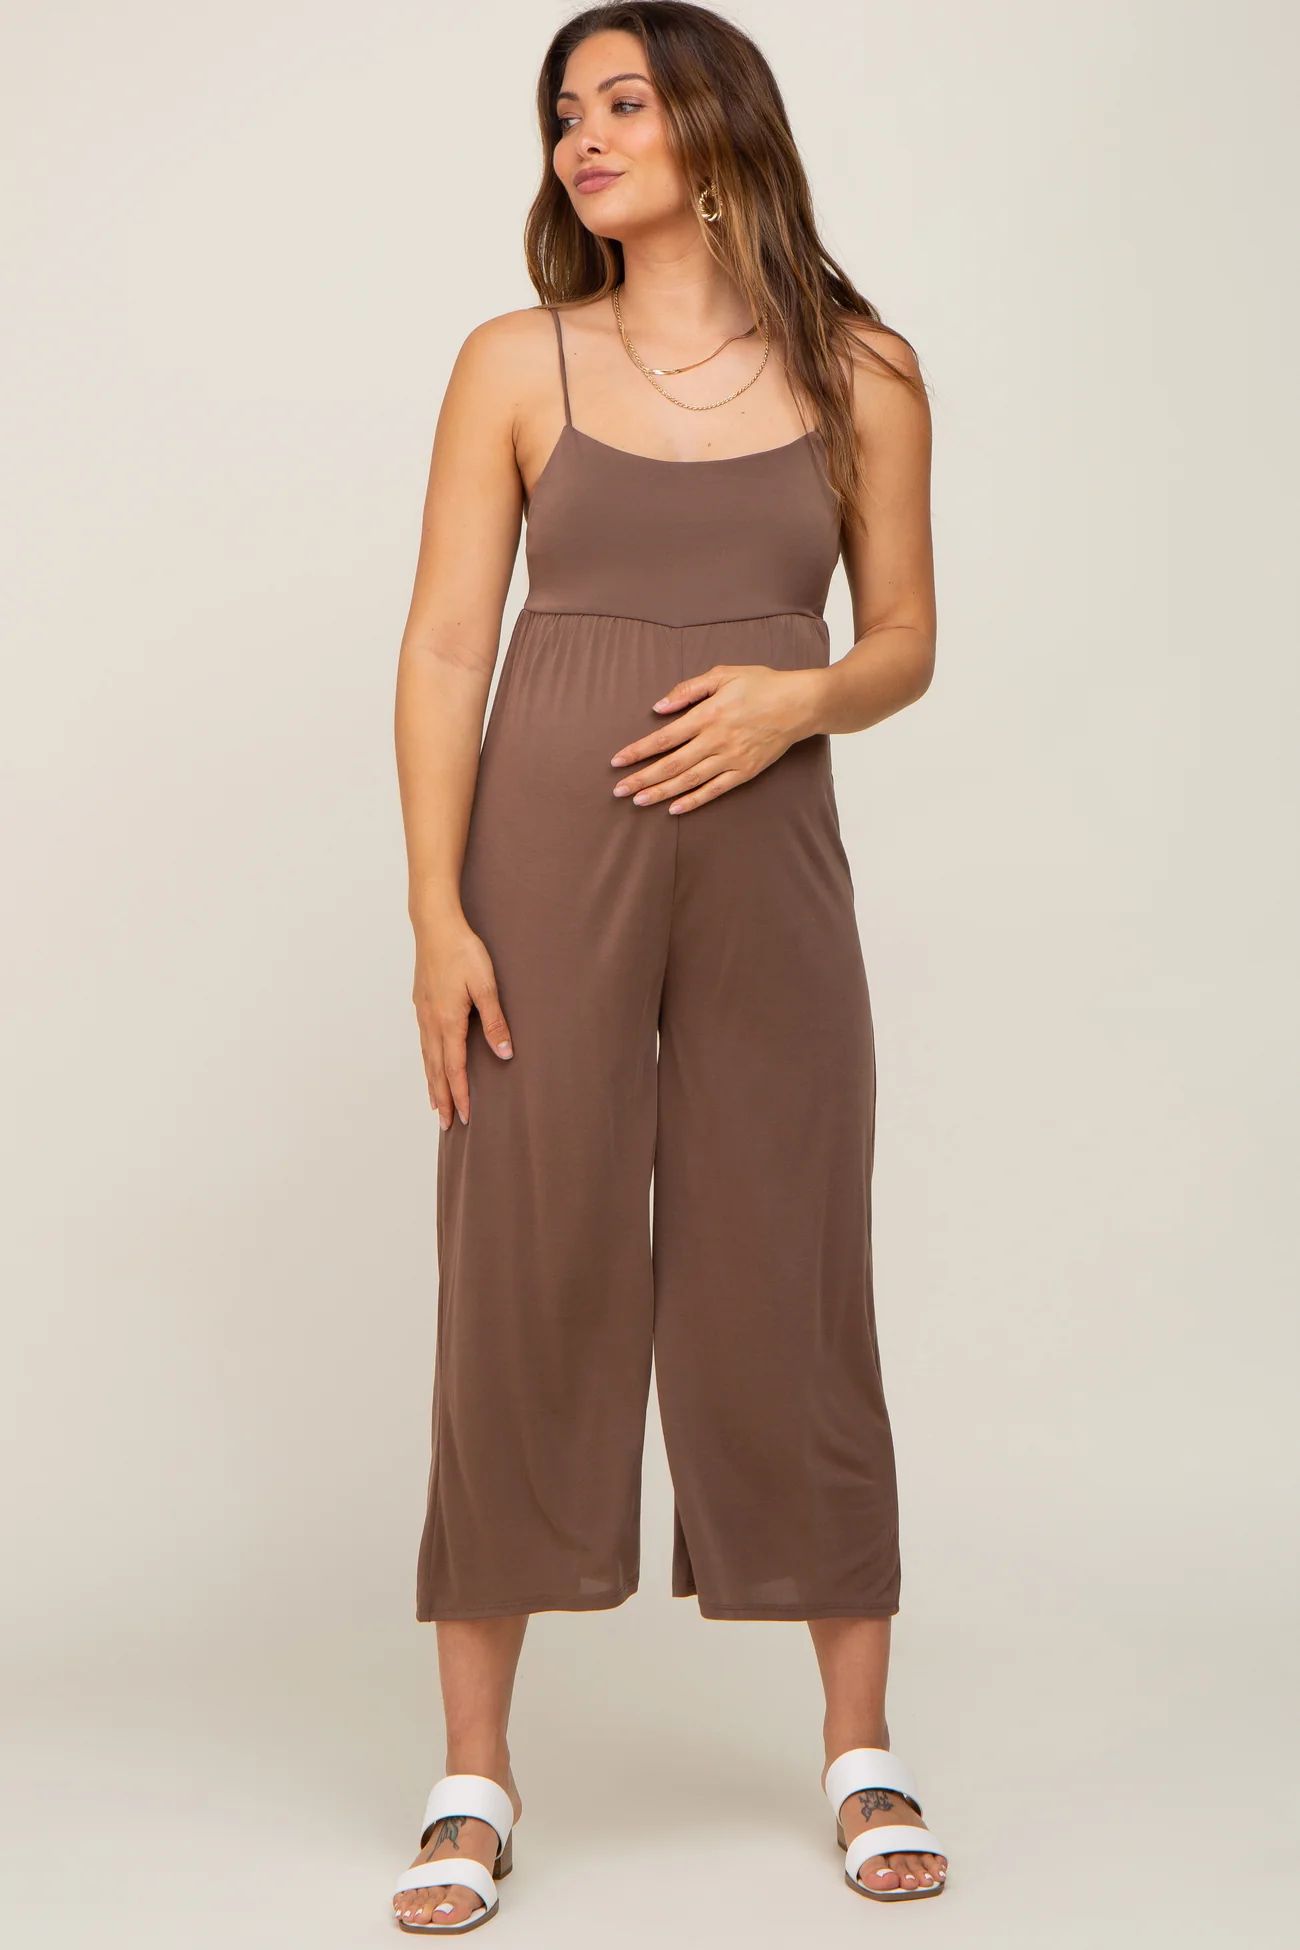 Brown Sleeveless Cropped Maternity Jumpsuit | PinkBlush Maternity